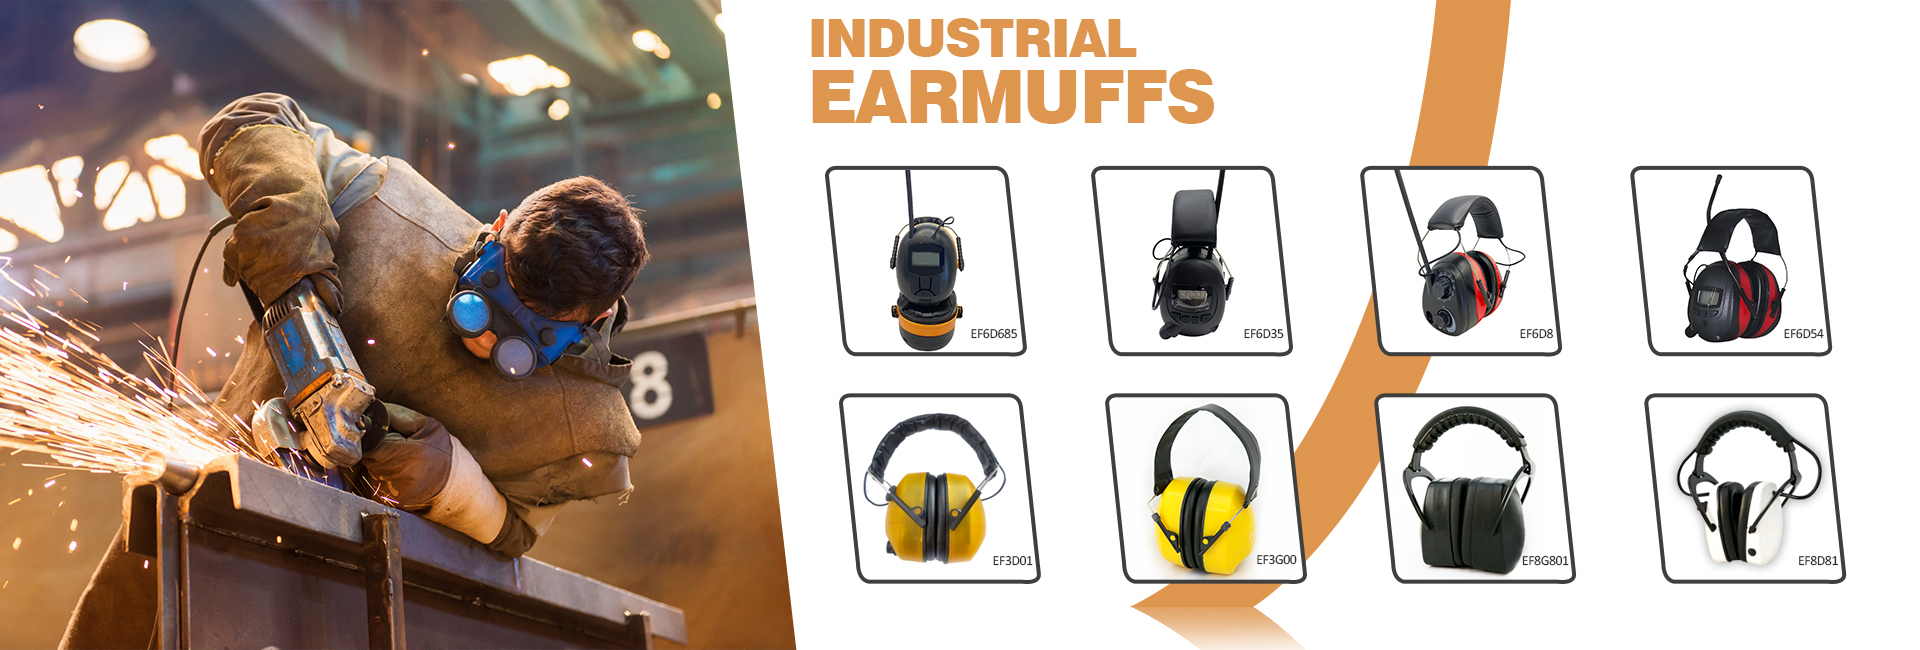 Industrial earmuffs